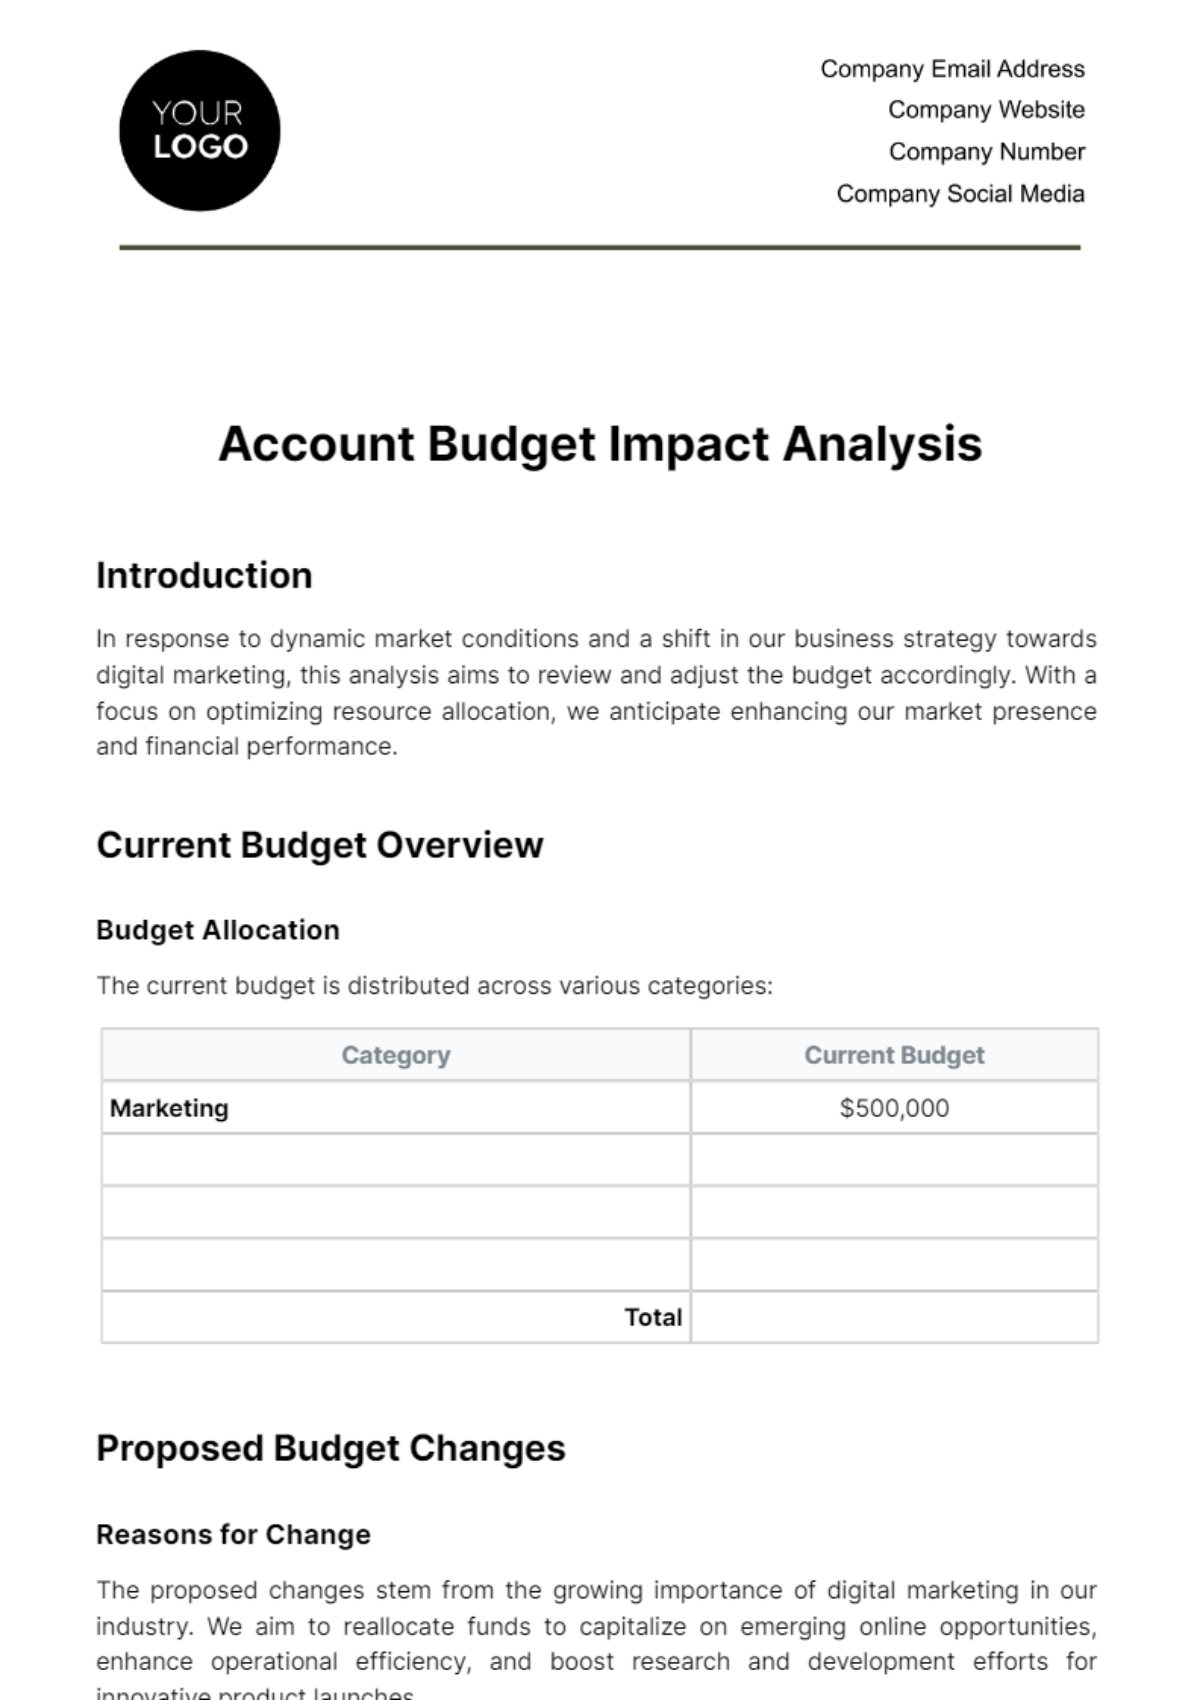 Account Budget Impact Analysis Template